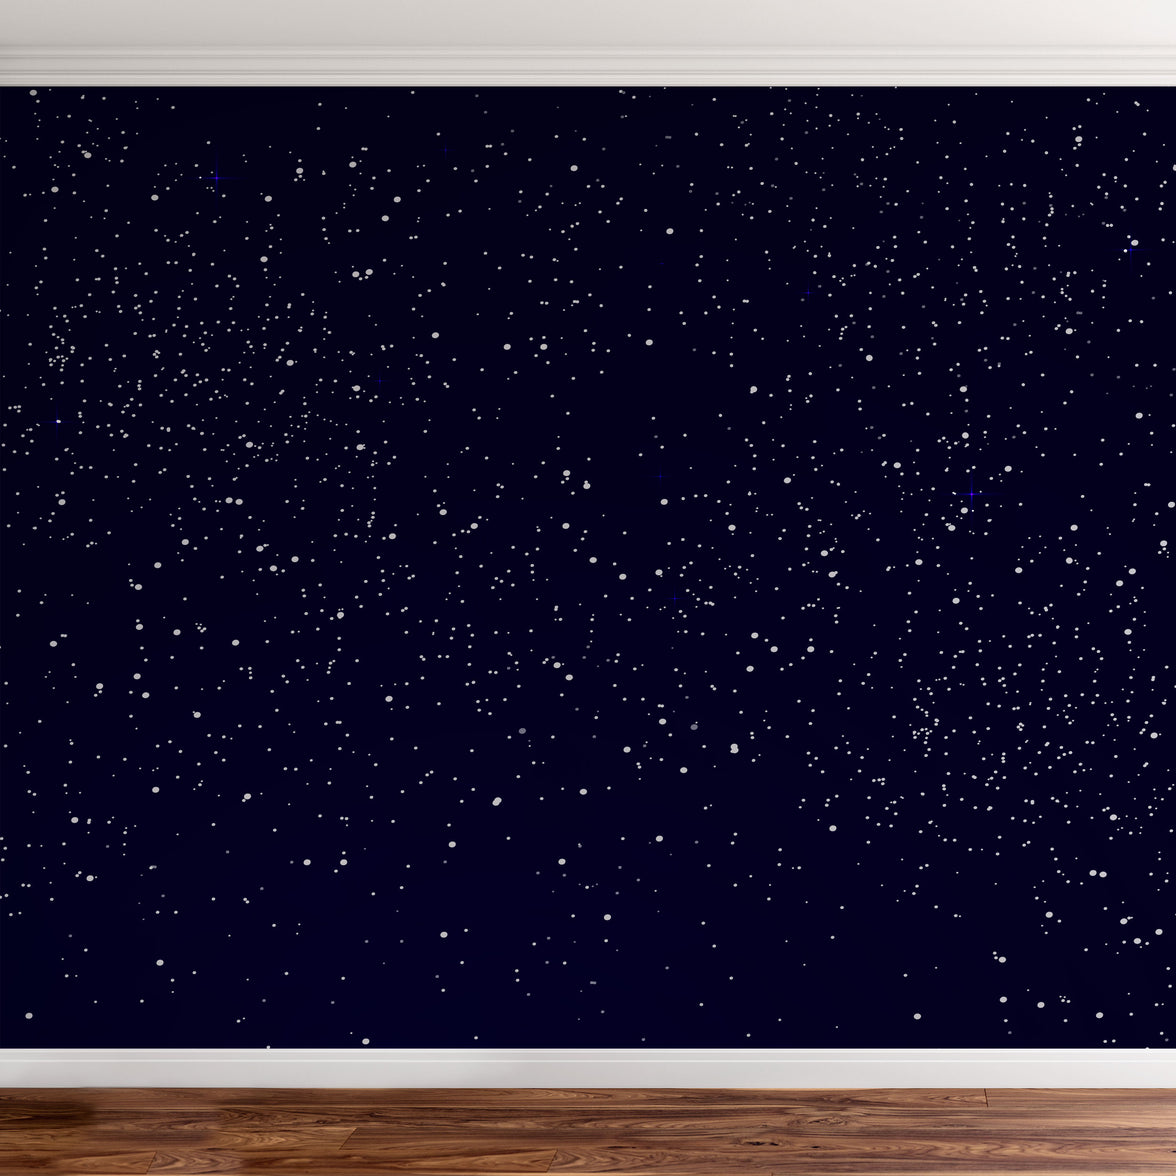 Space wallpaper